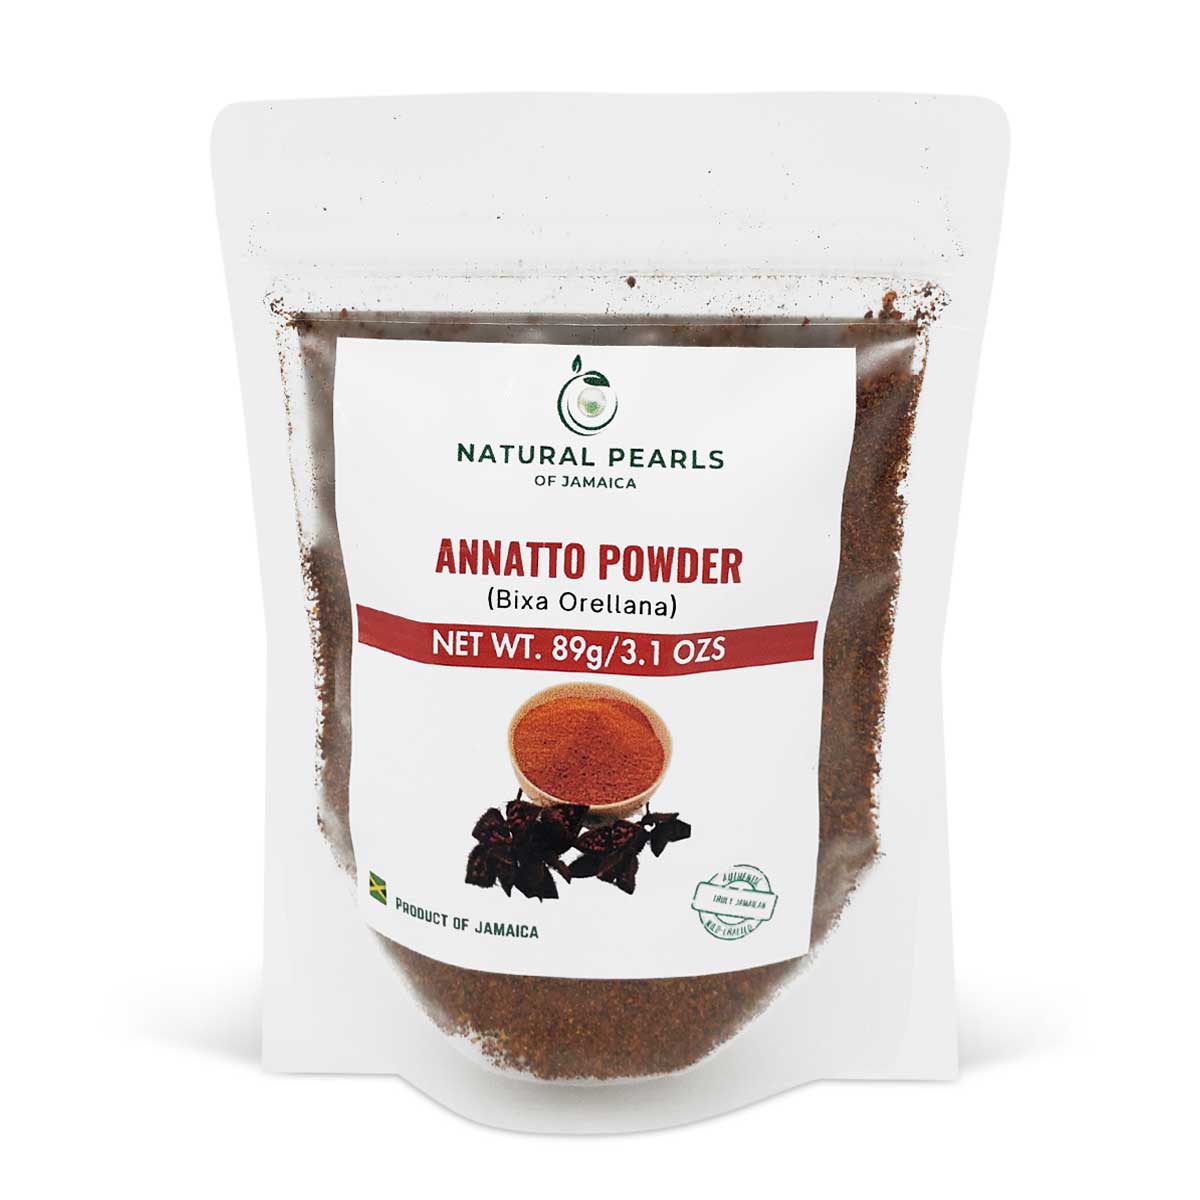 Natural Pearls of Jamaica Annatto Powder, 3.1oz